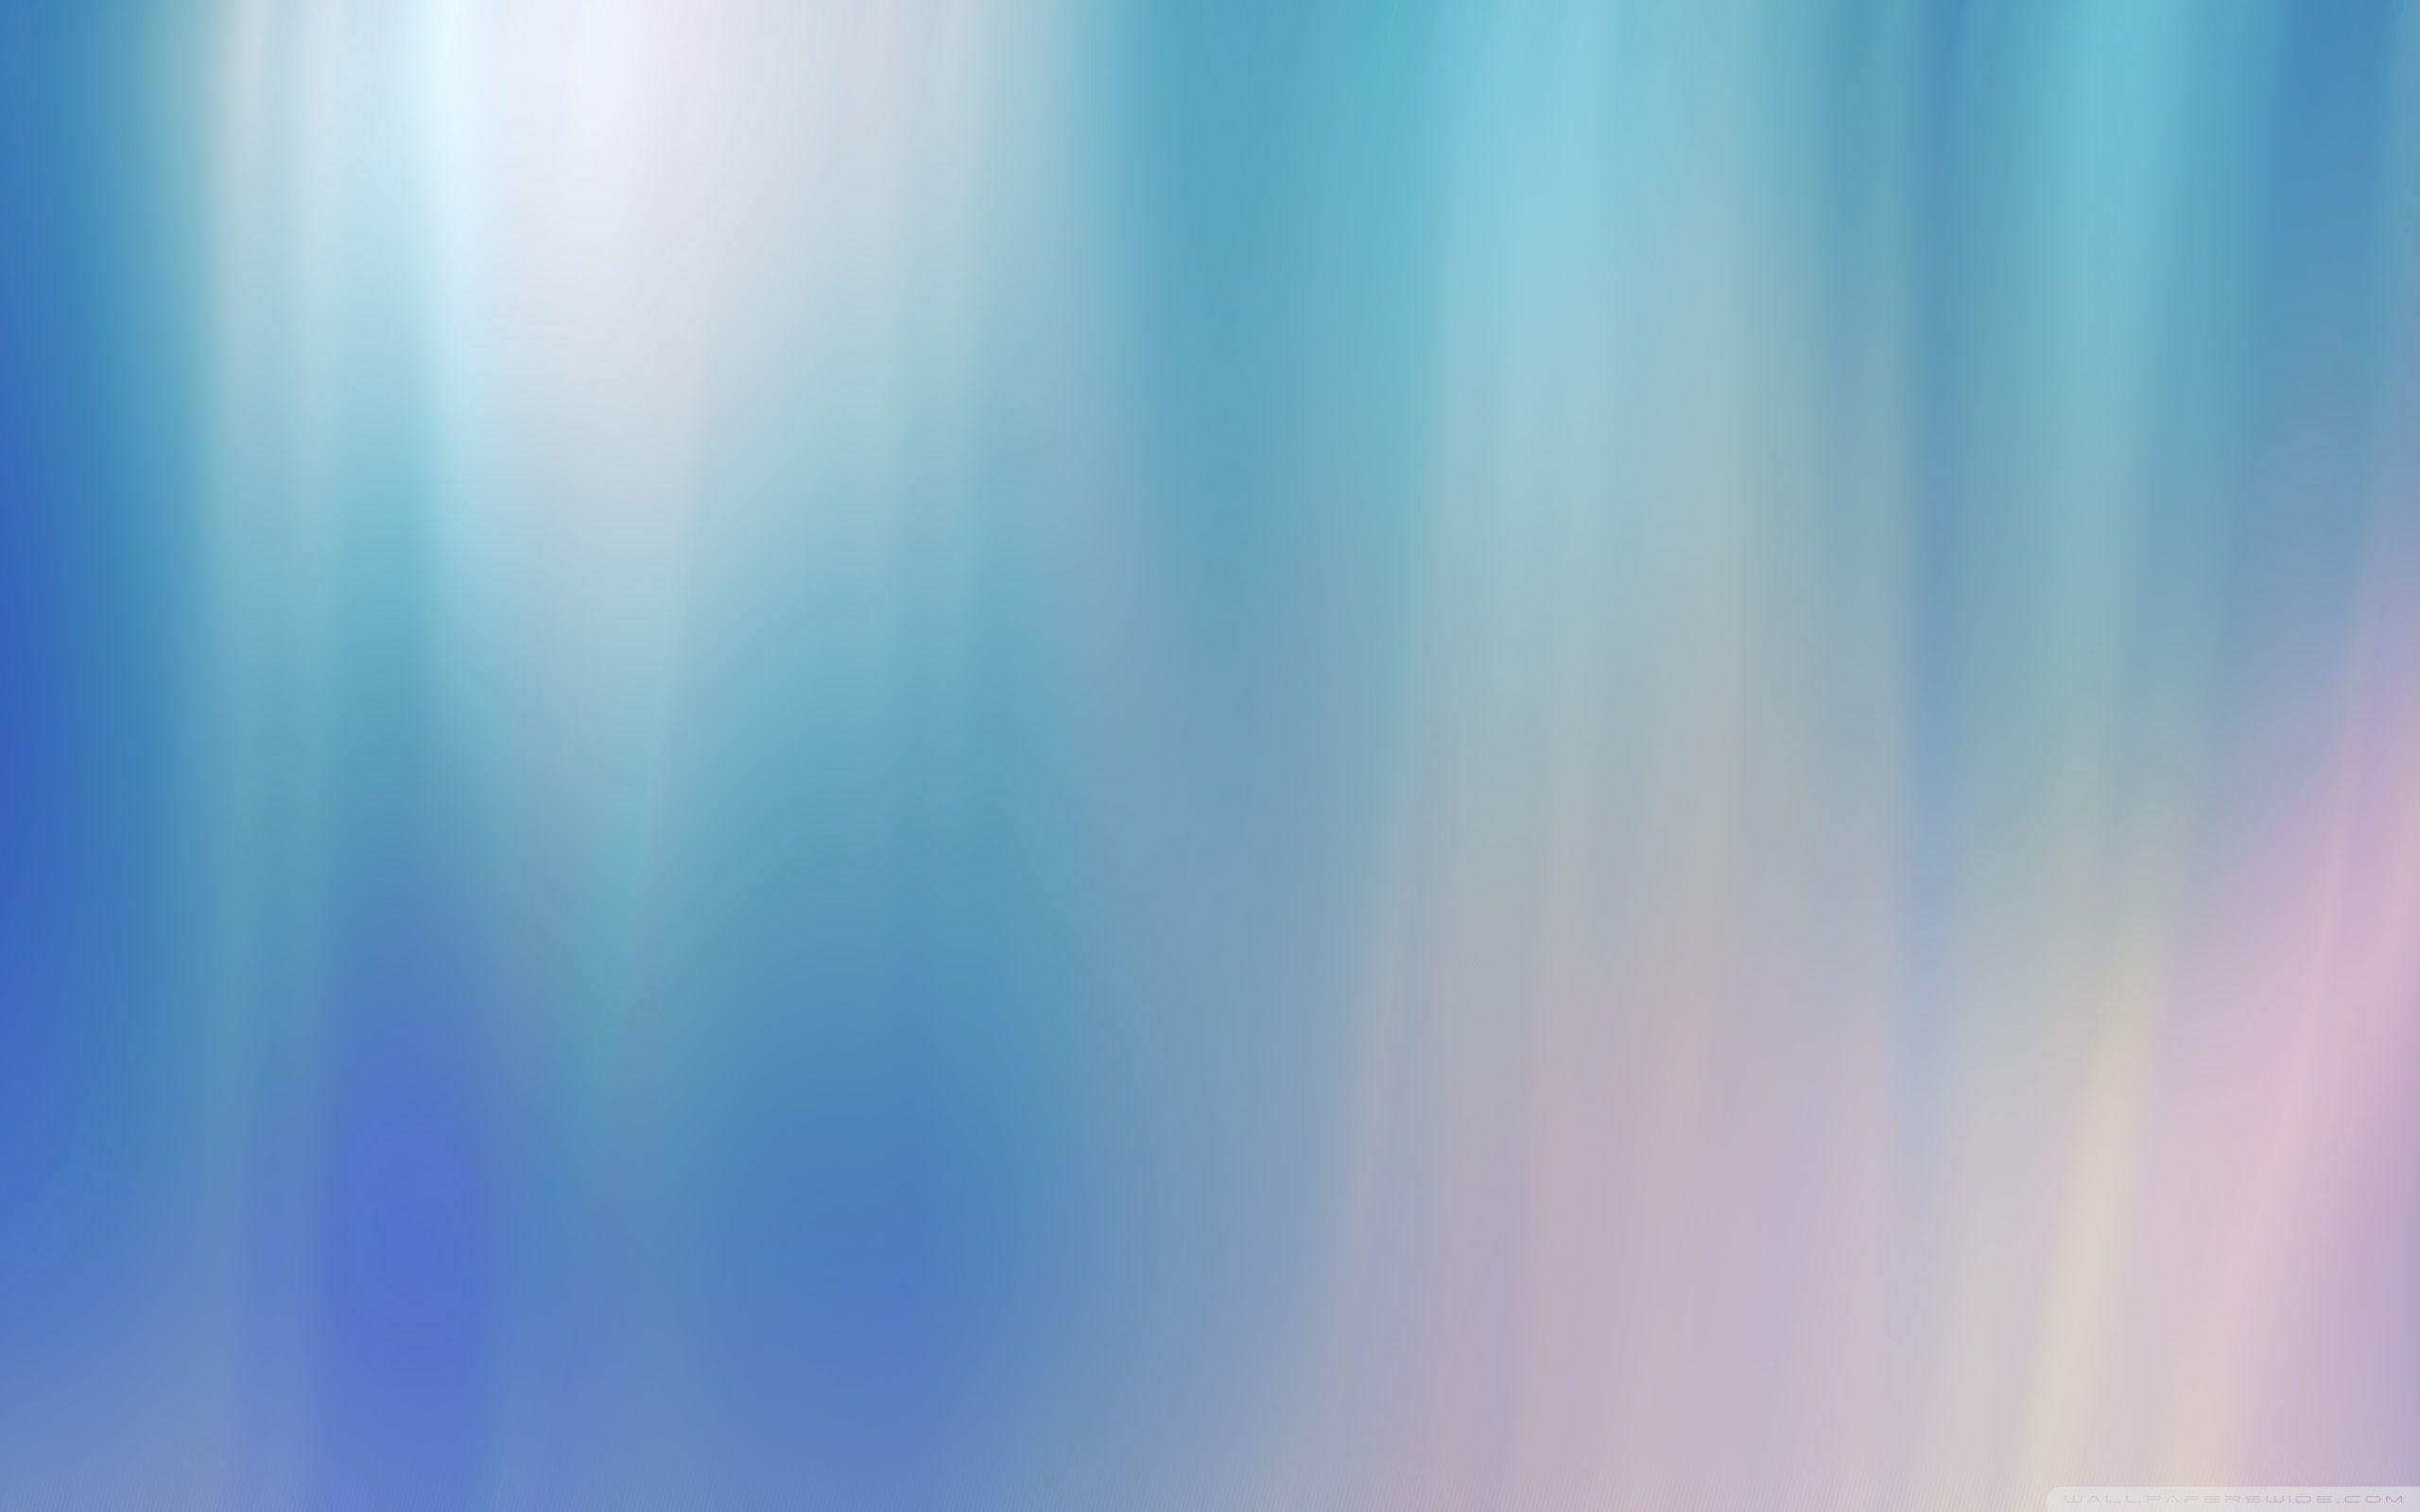 a light blue background